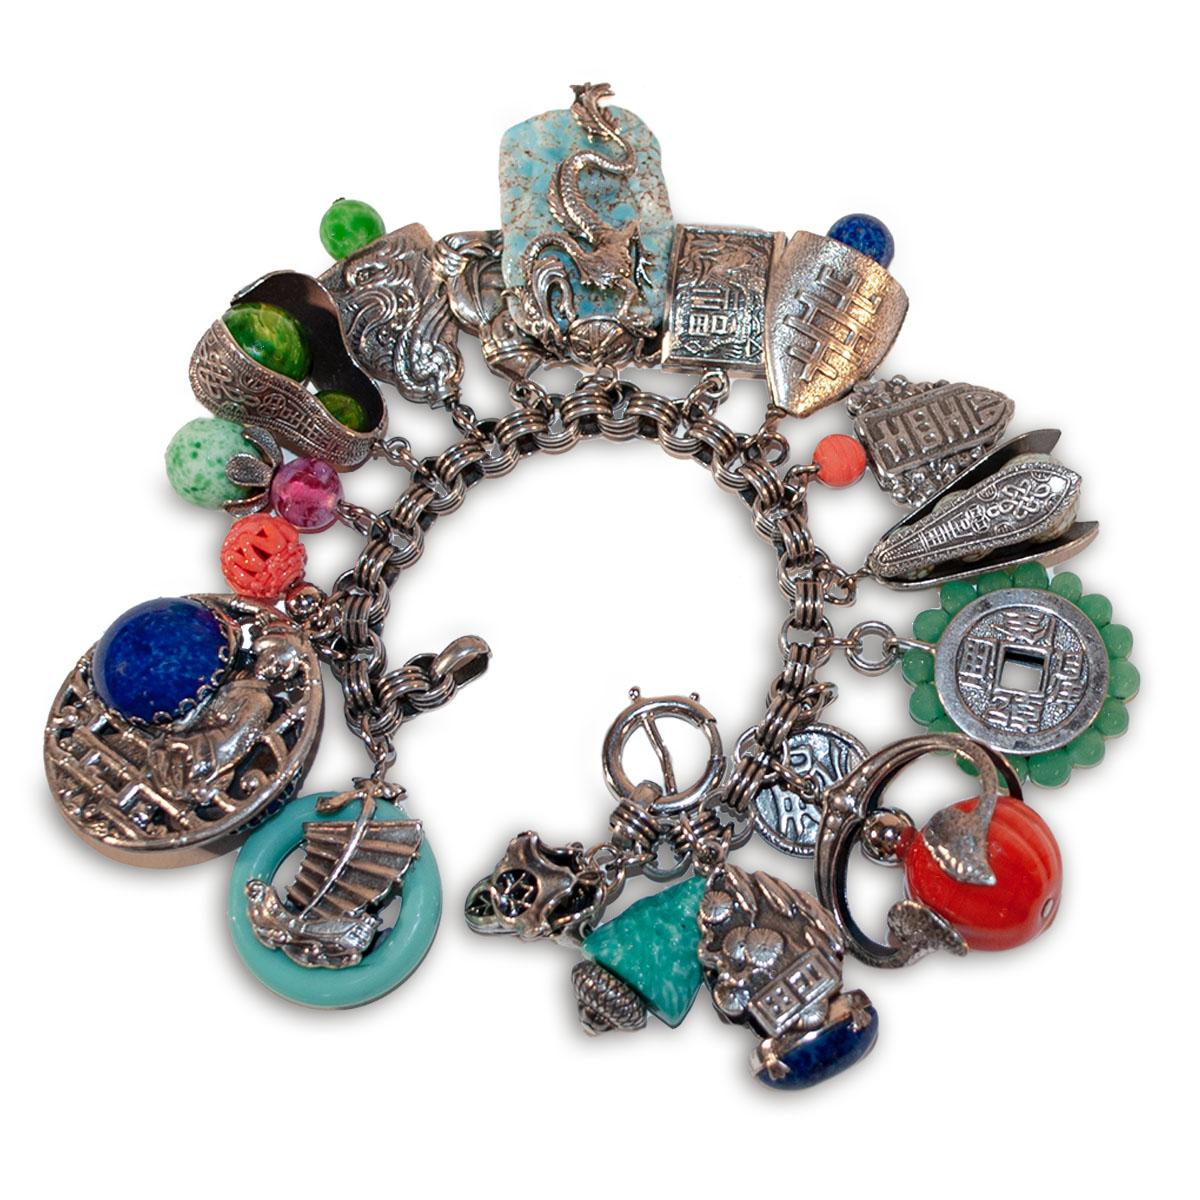 1950s napier charm bracelet